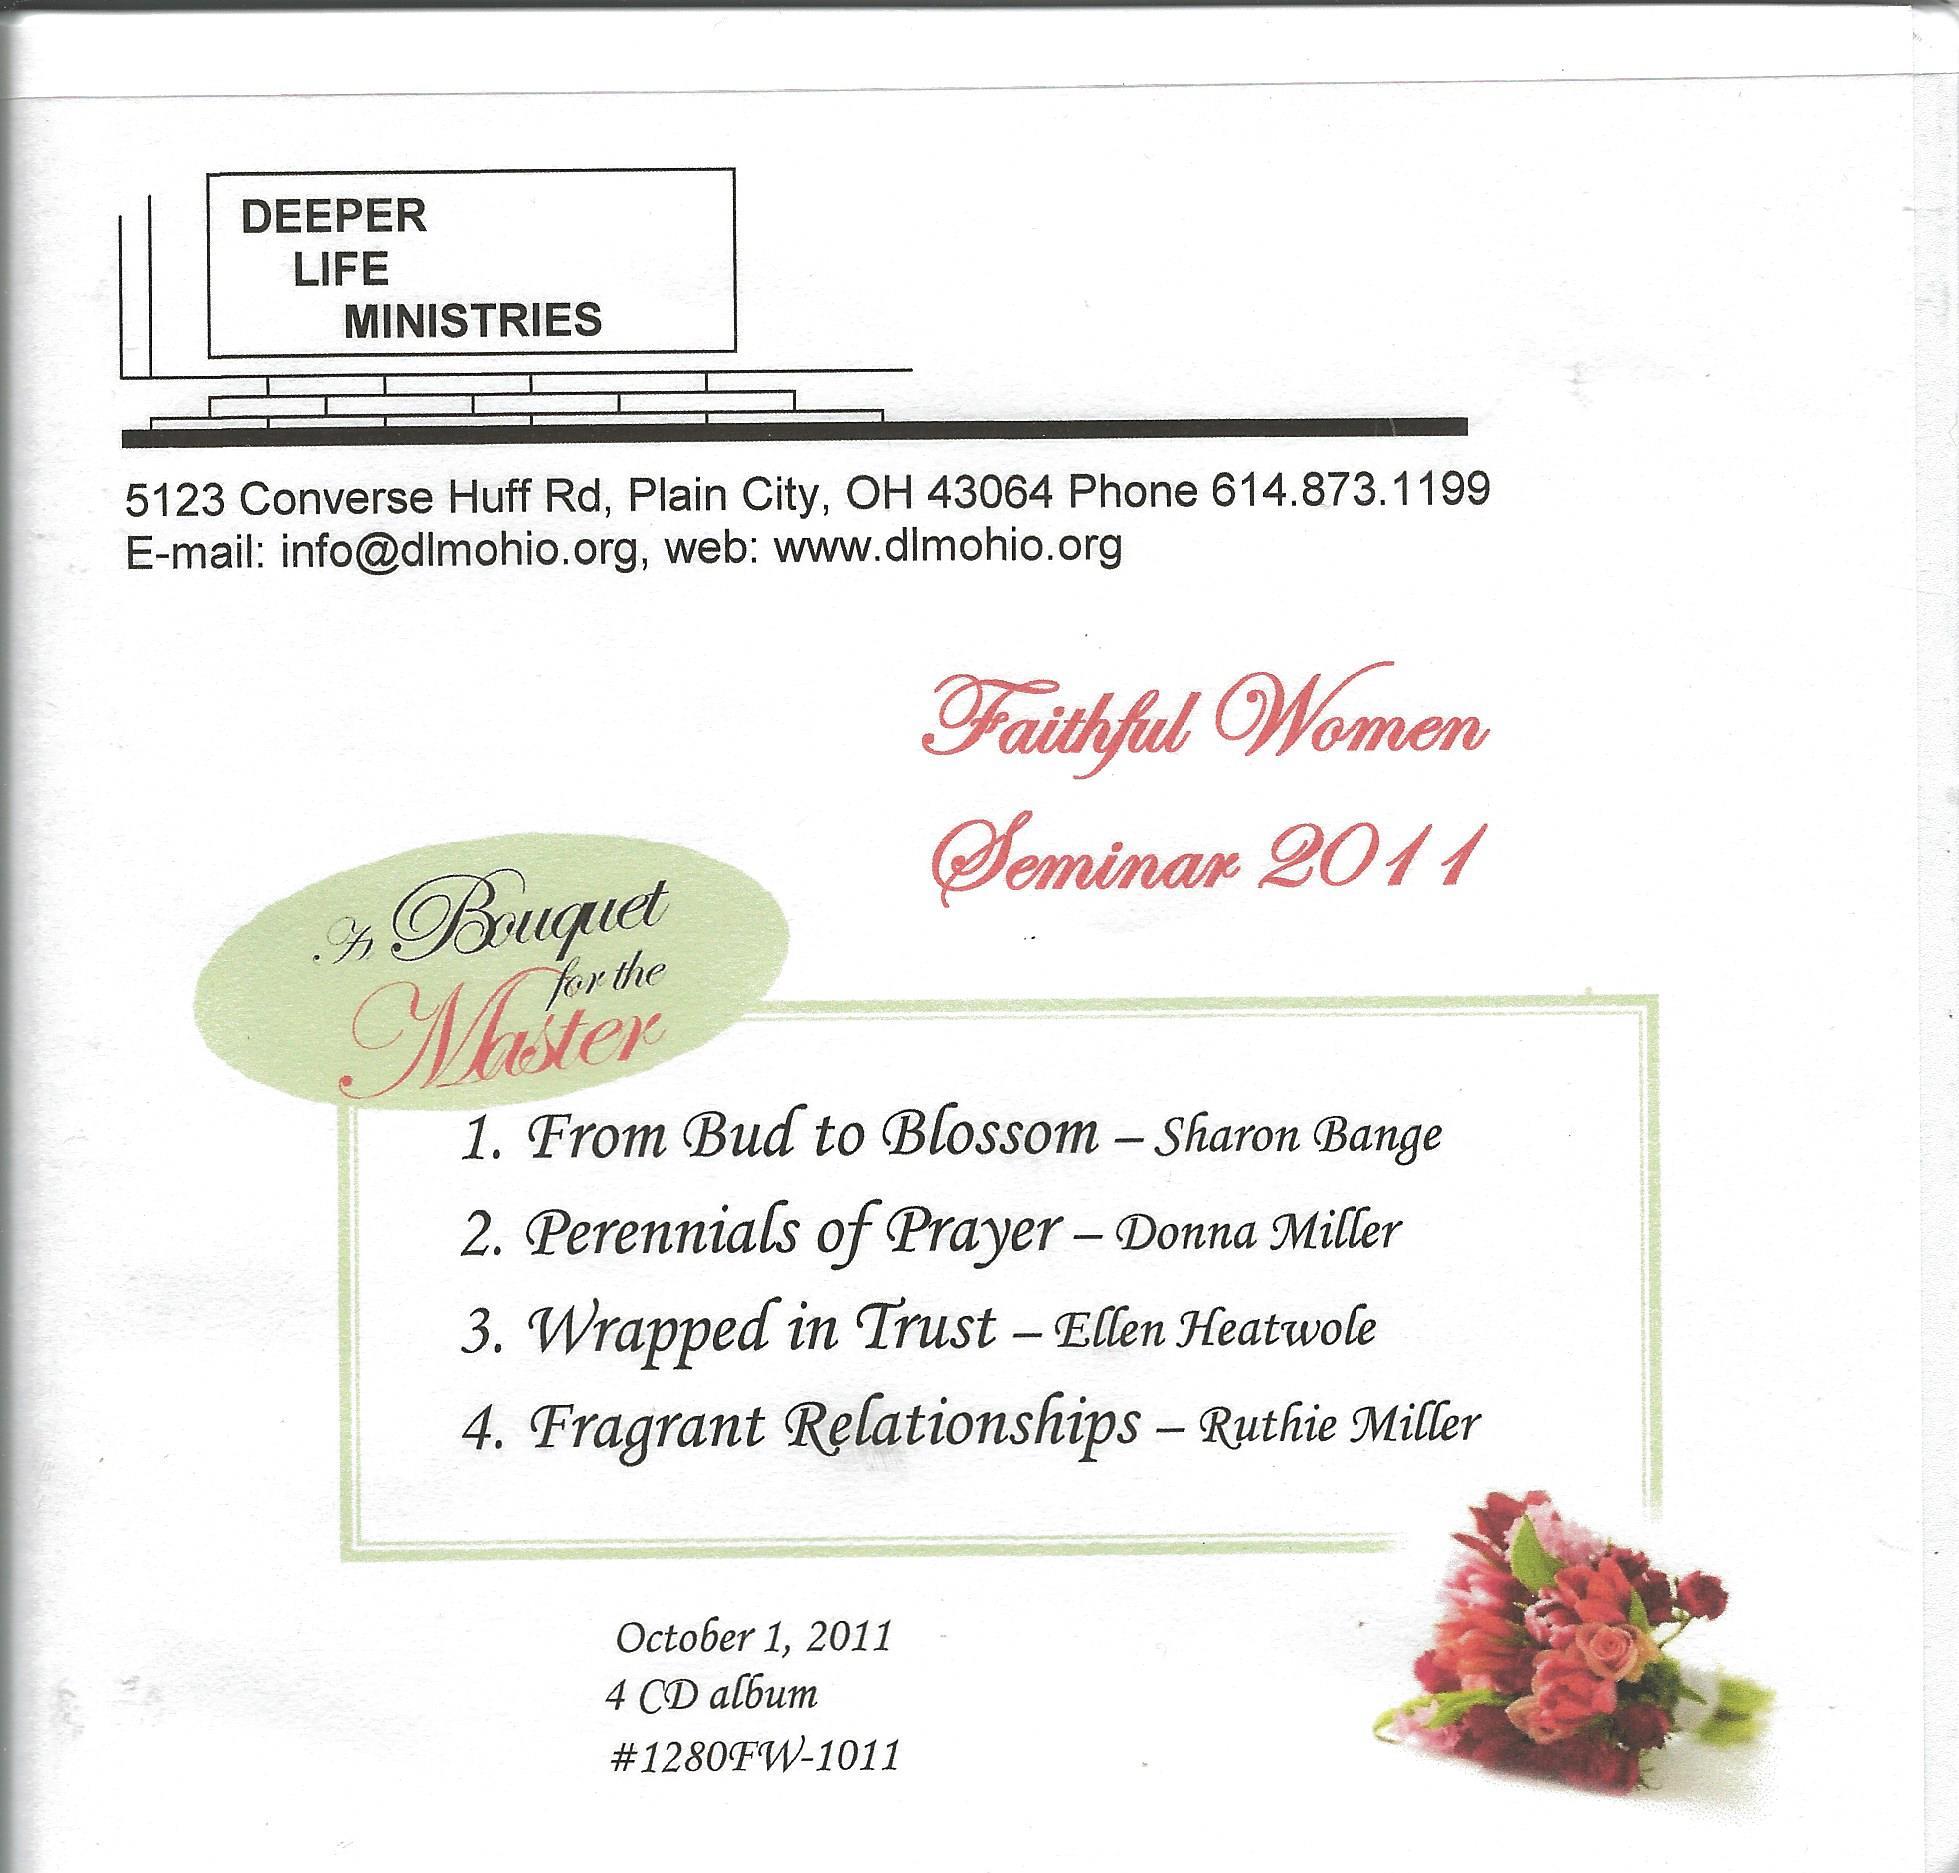 FAITHFUL WOMEN SEMINAR 2011 4 CD album - Click Image to Close